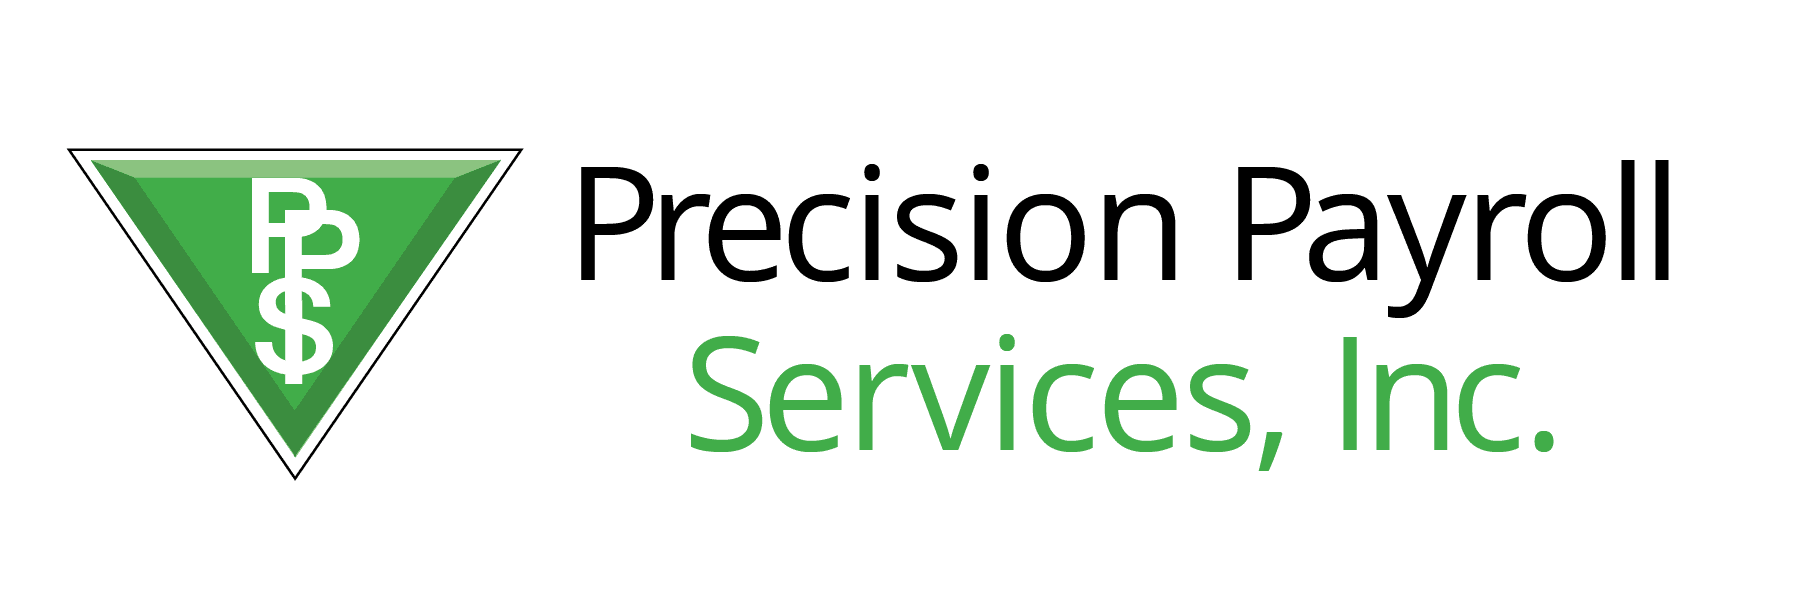 Precision Payroll Services Inc.